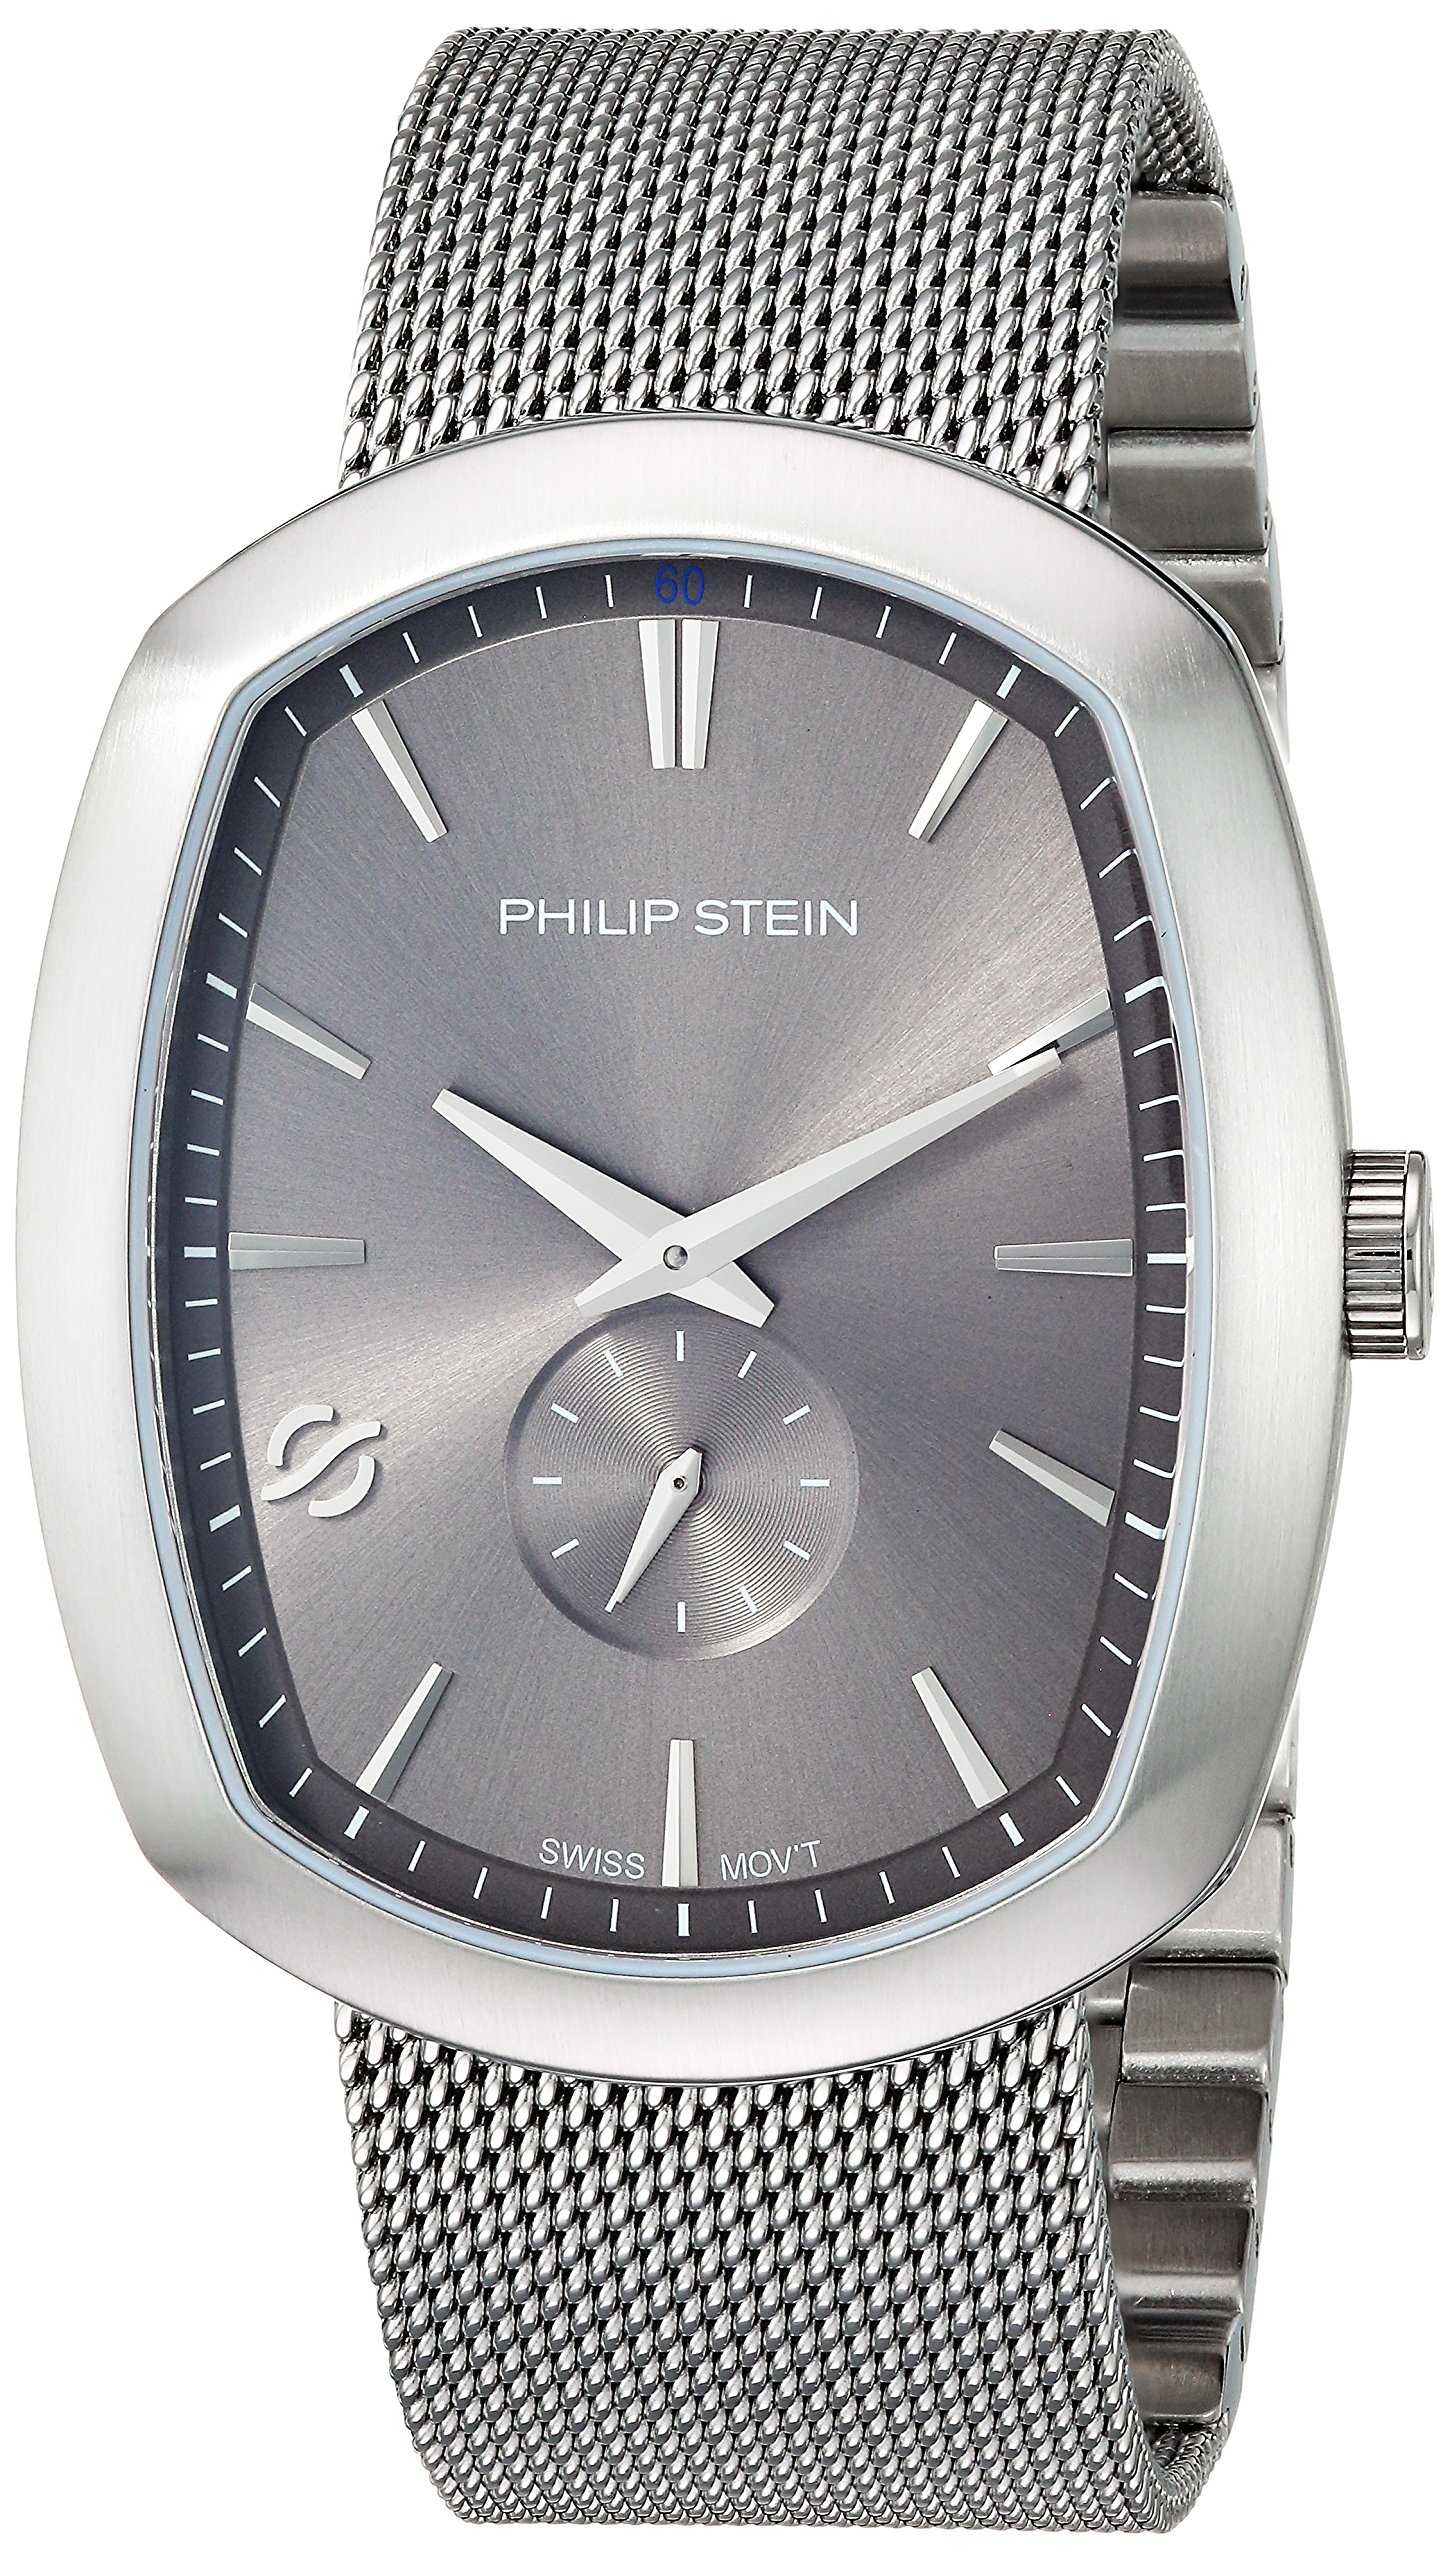 Philip Stein Men's Modern Stainless Steel Swiss-Quartz Watch with Stainless-Steel Strap, Silver, 22 (Model: 72-CPLT-MSS)